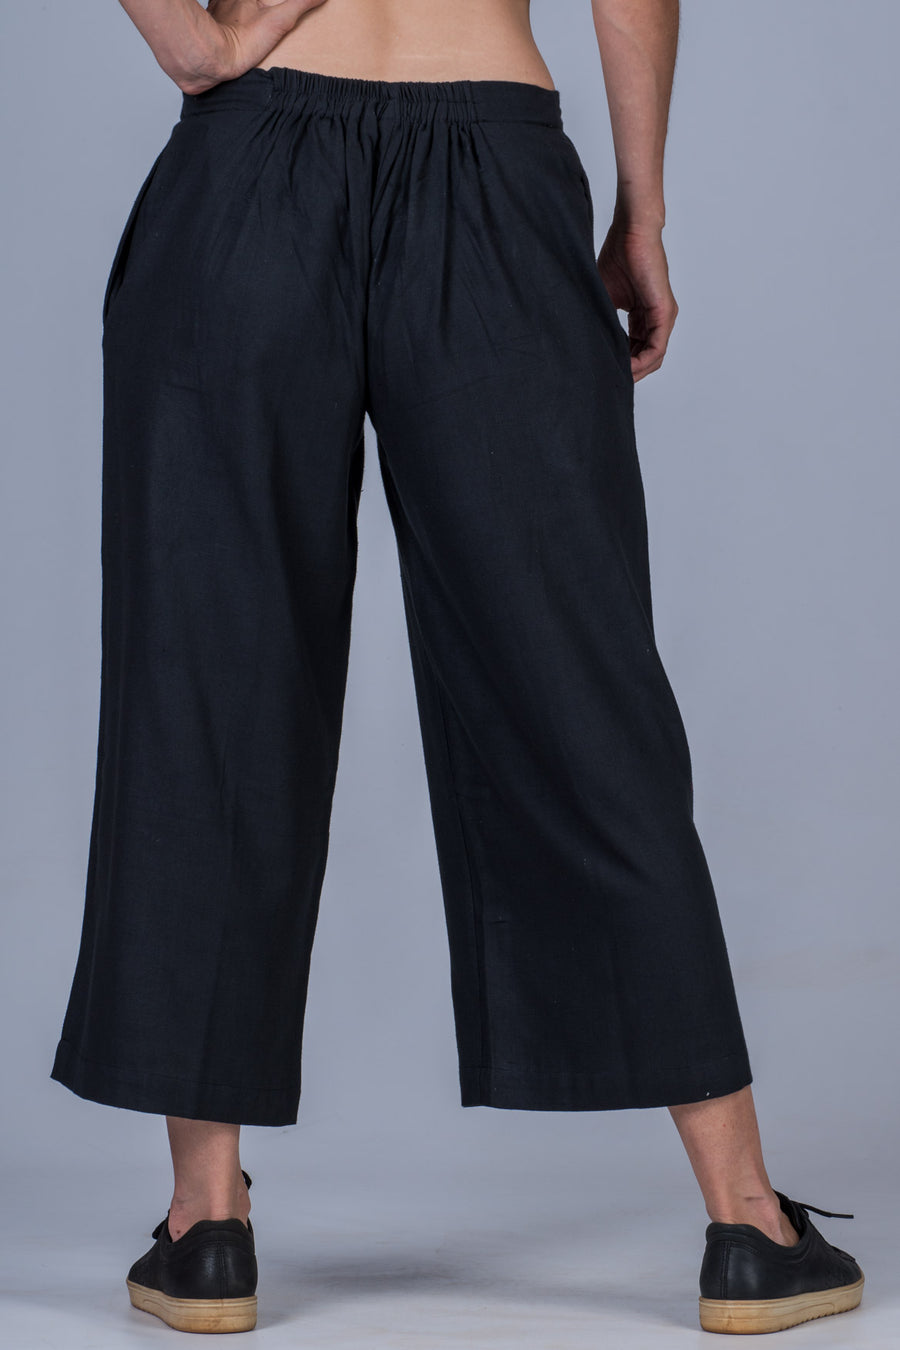 ORIGINAL KHAADI Trousers T15  Shaner Boutique